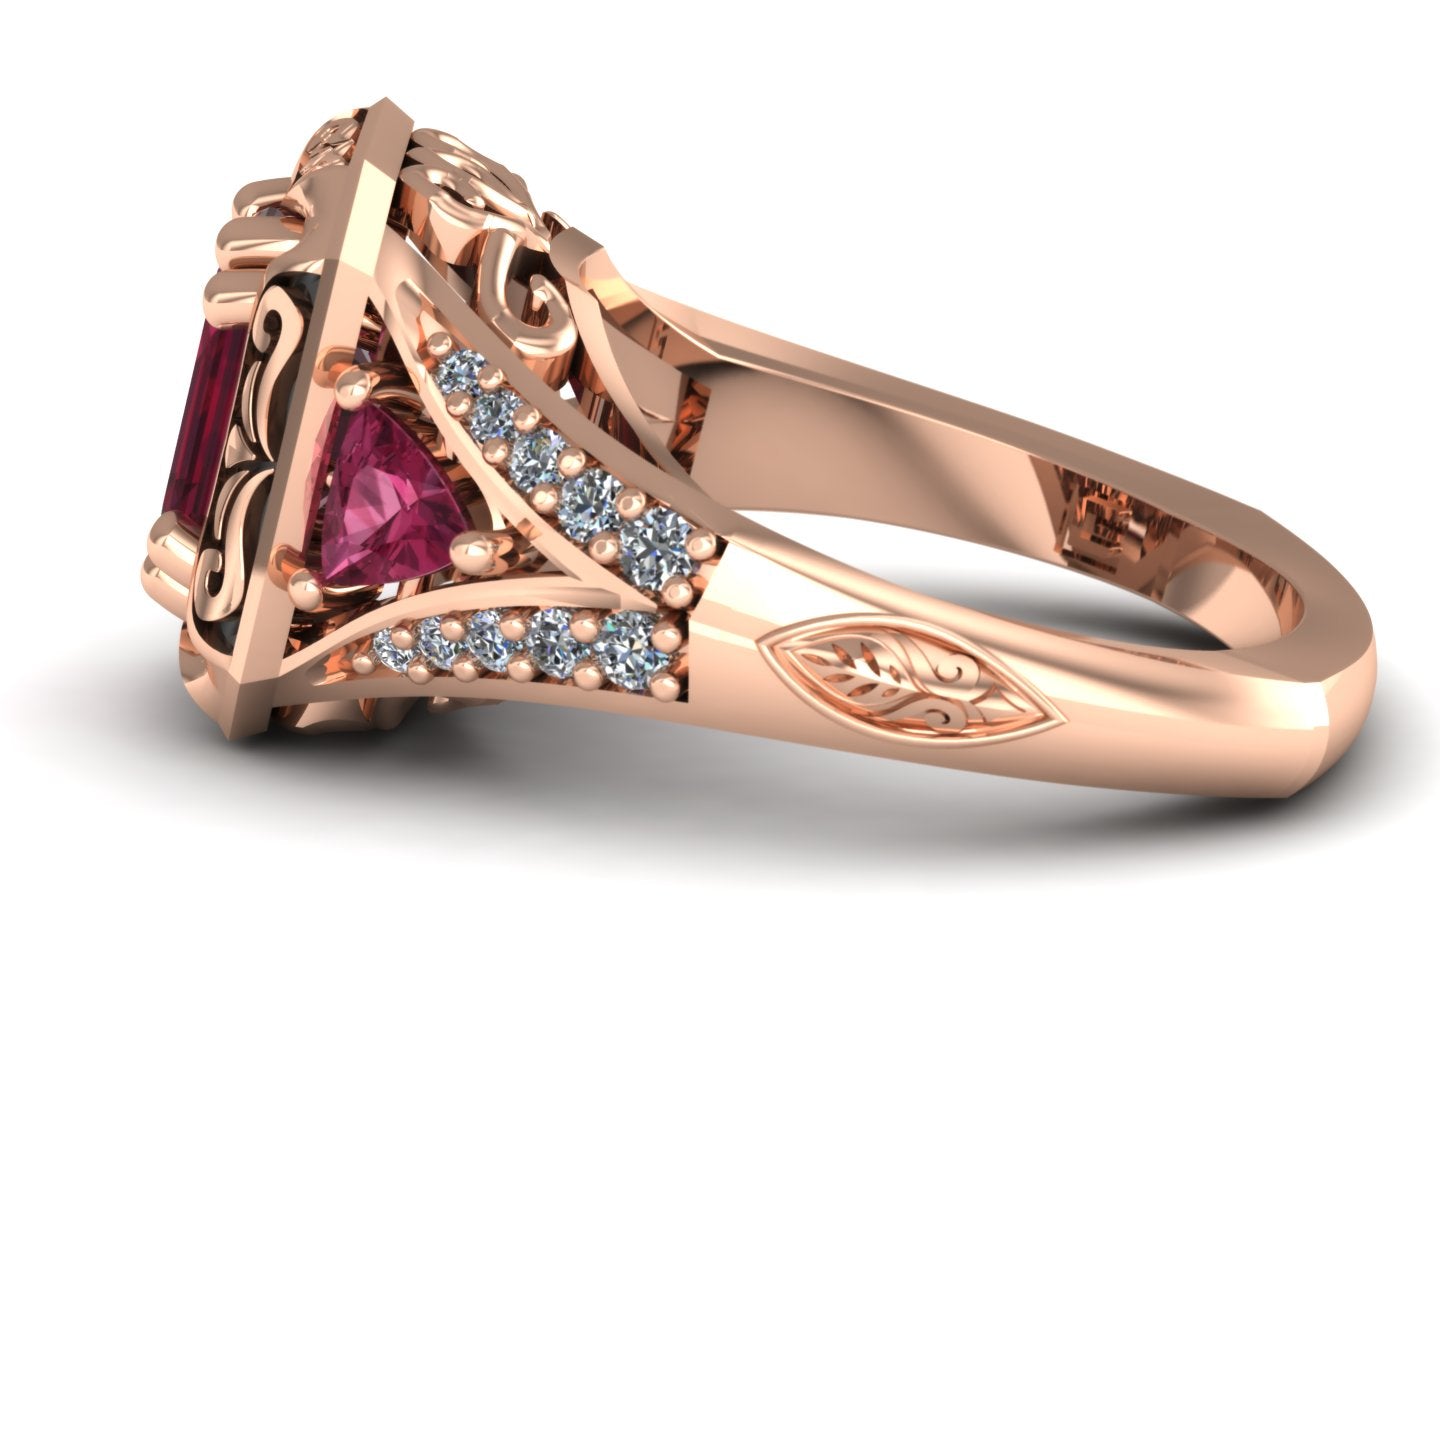 emerald cut rhodolite garnet trillion pink tourmaline and diamond split shank ring in 14k rose gold - Charles Babb Designs - side view